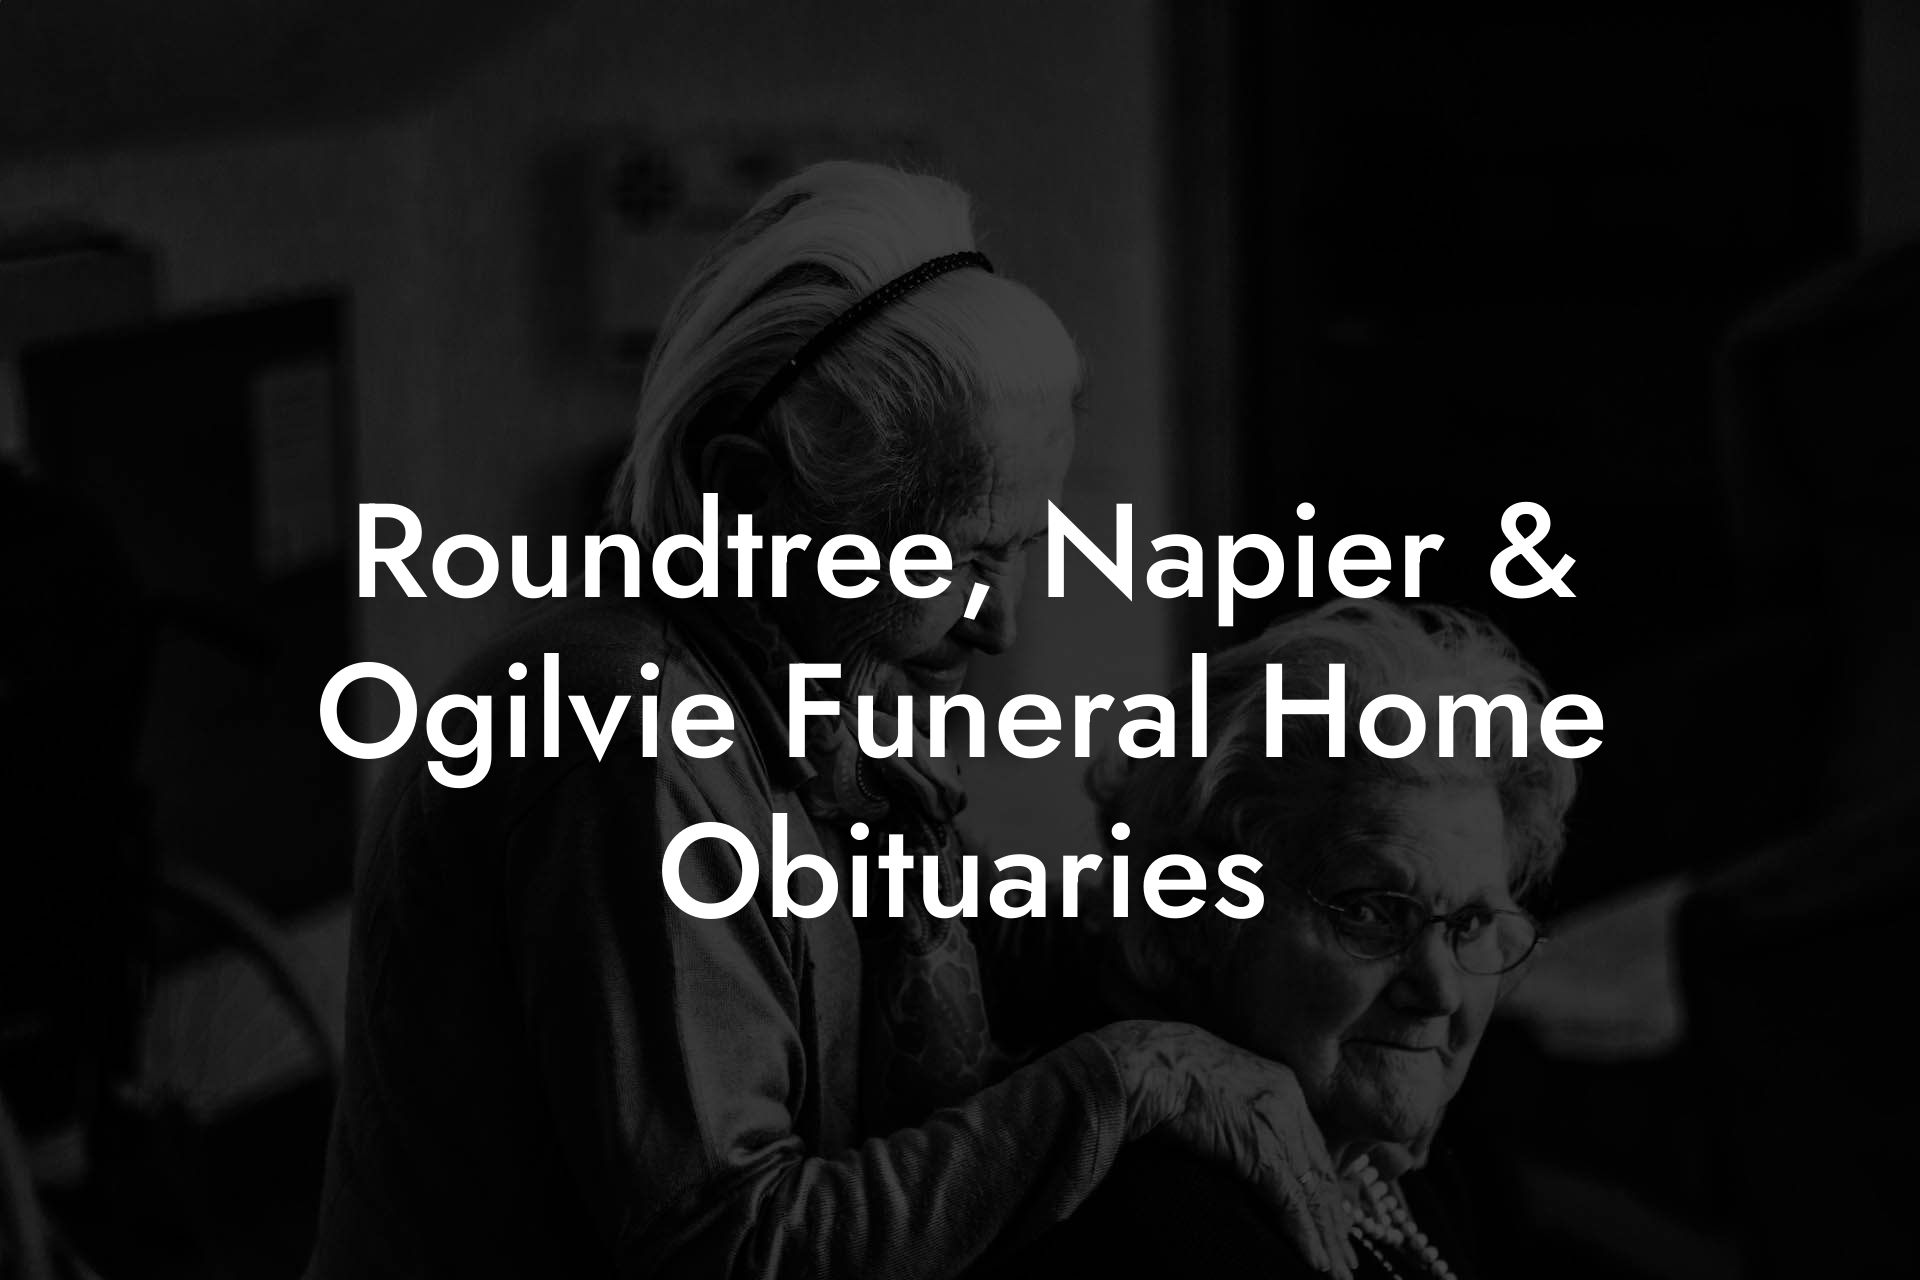 Roundtree, Napier & Ogilvie Funeral Home Obituaries